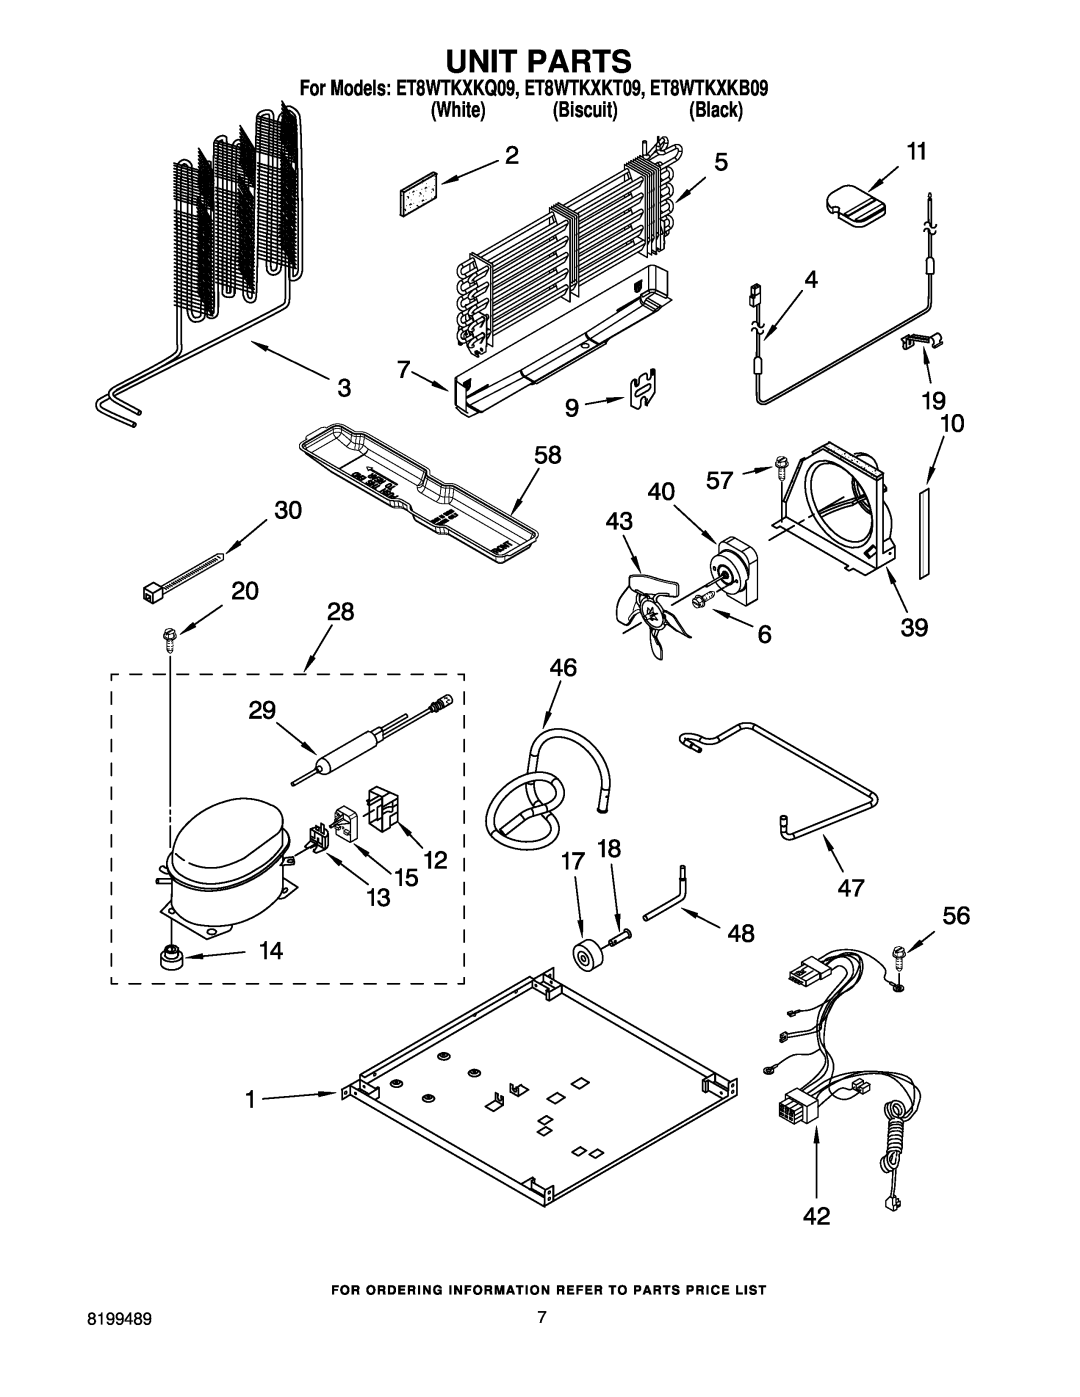 Whirlpool manual Unit Parts, For Models ET8WTKXKQ09, ET8WTKXKT09, ET8WTKXKB09 White Biscuit Black 